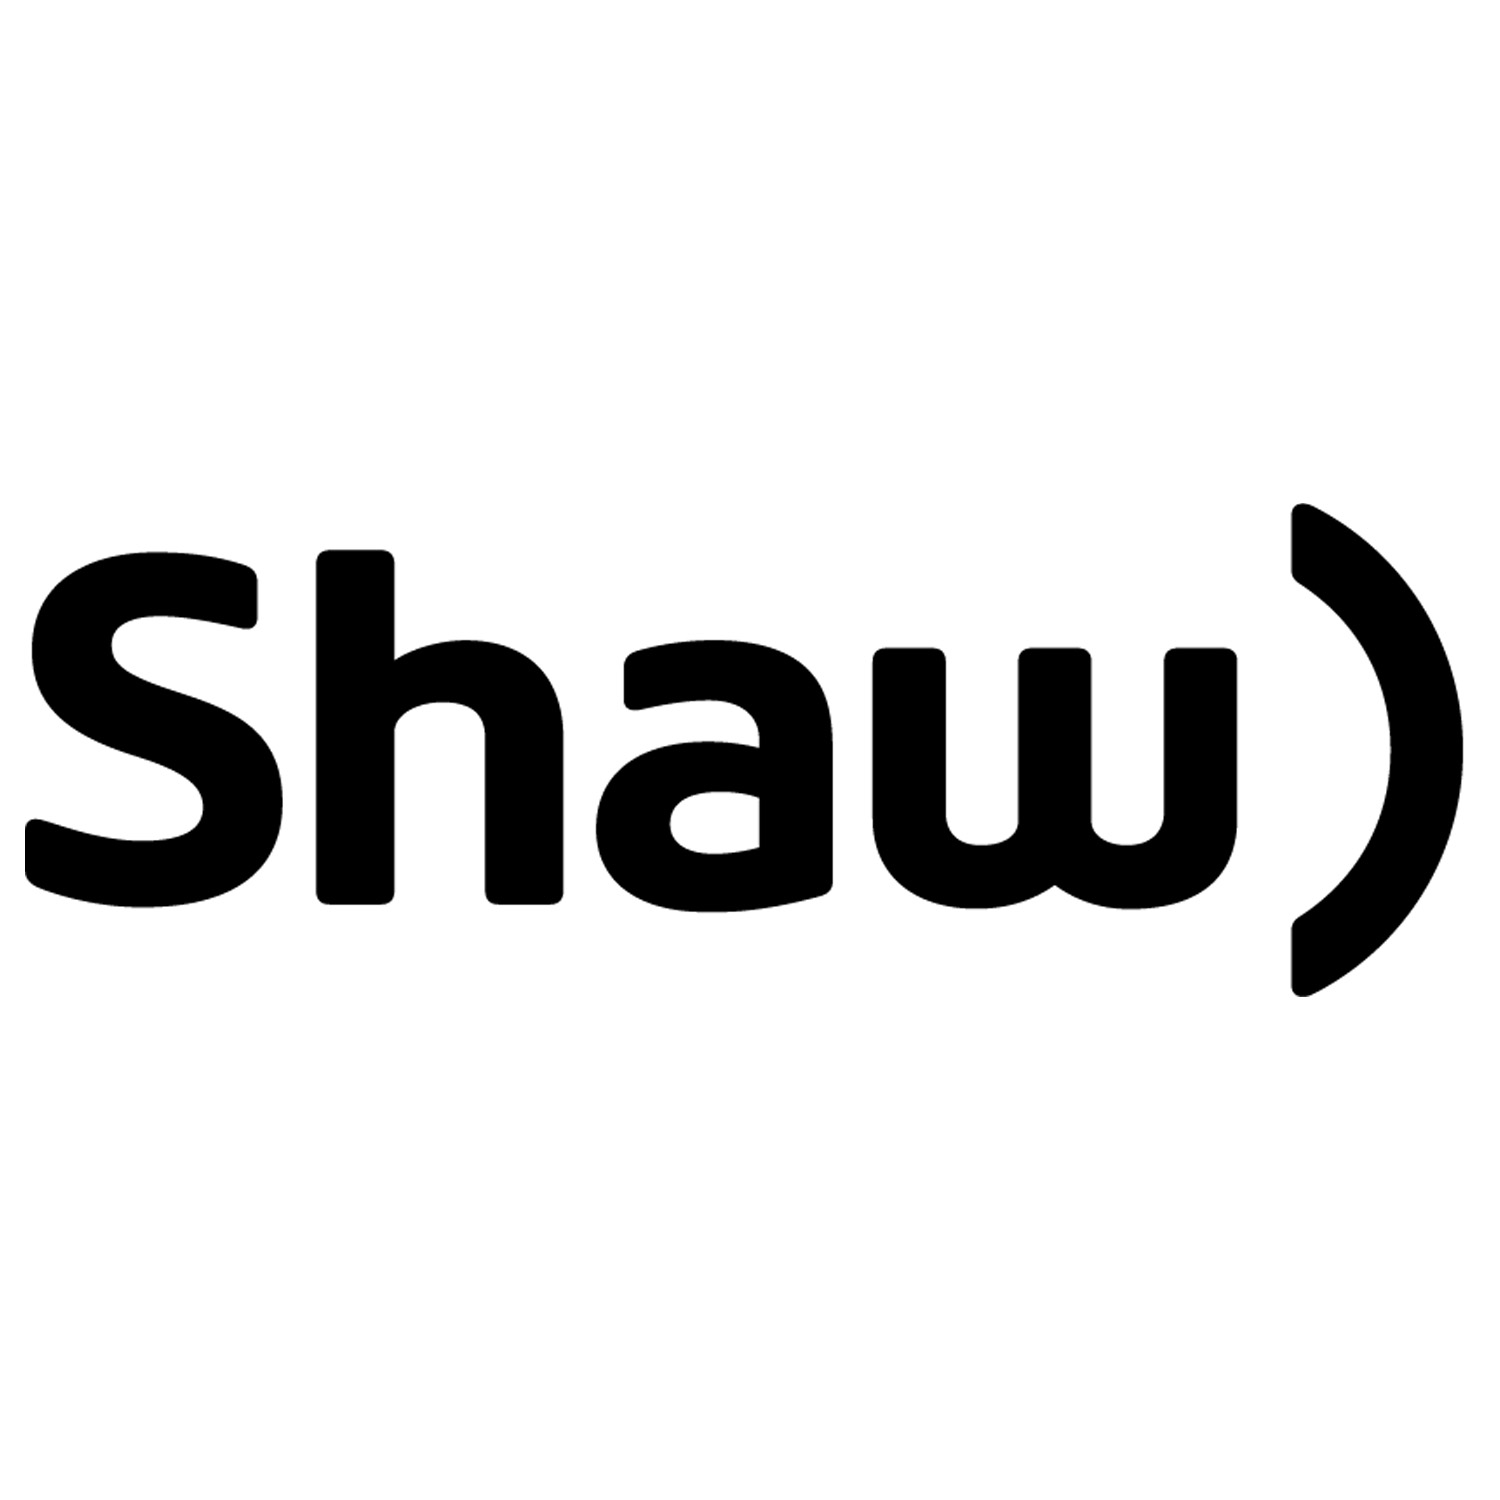 Shaw_big.jpg